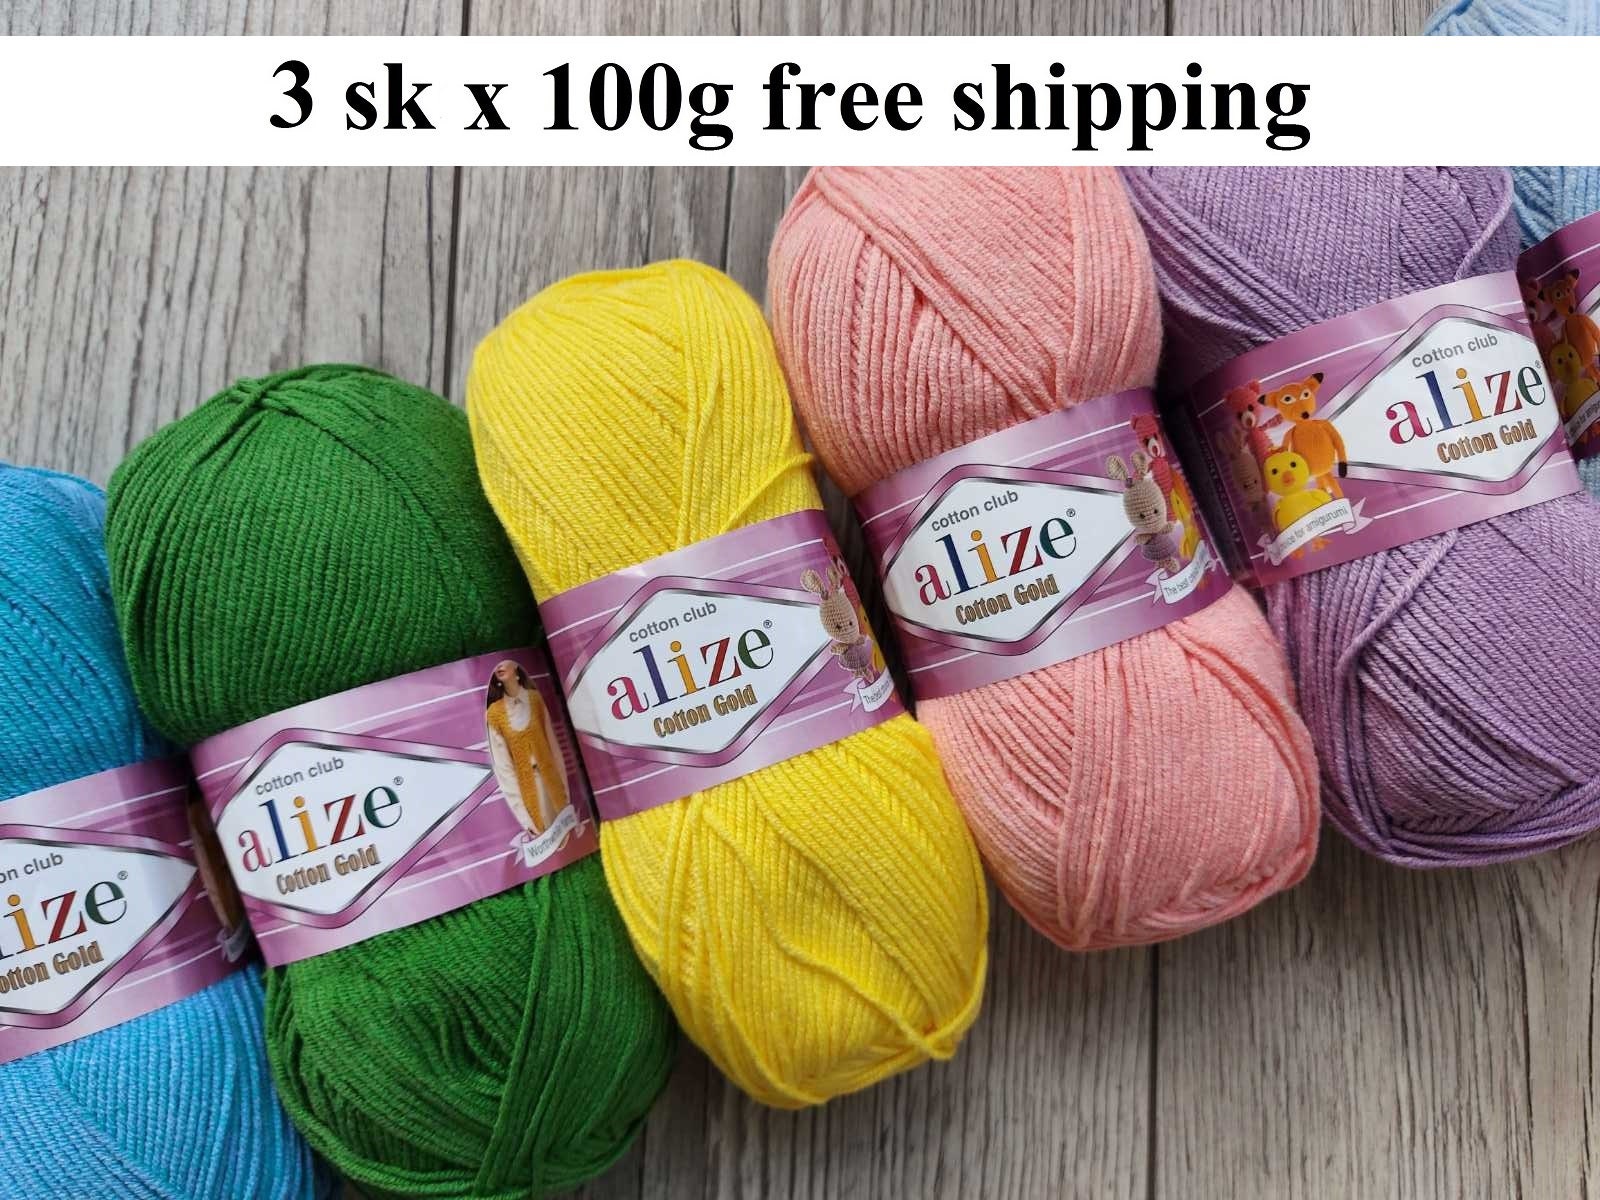 Alize Cotton Gold Pratica 100 Gr Soft Yarn for Hand Knitting